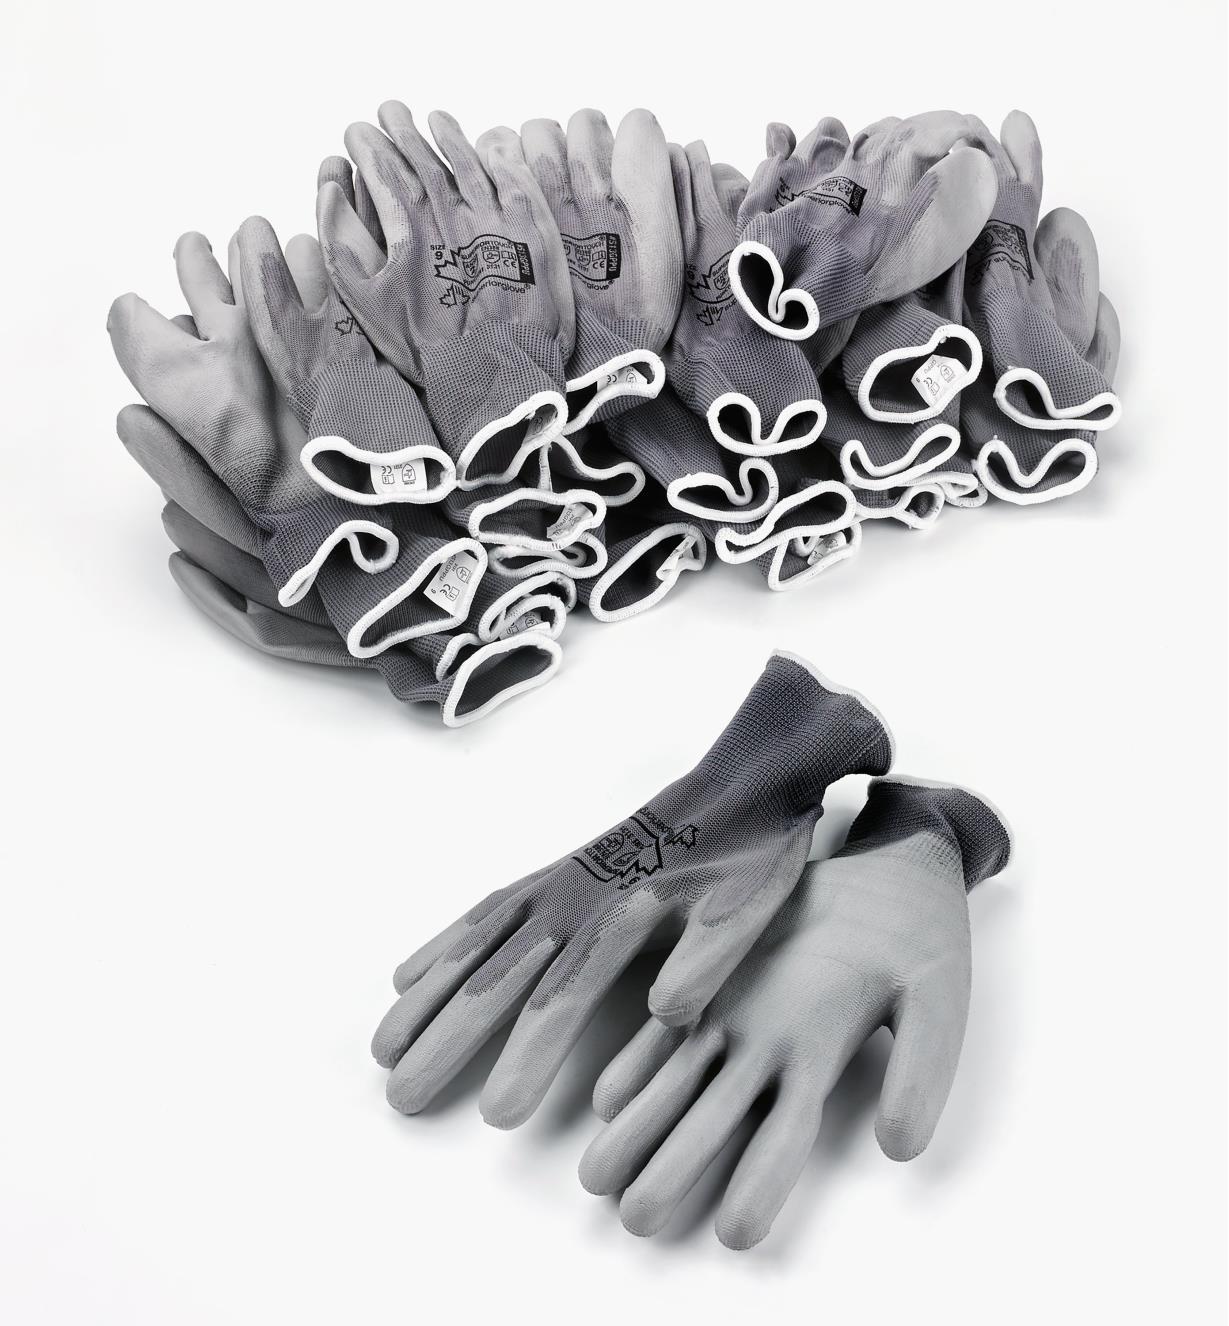 99W8687 - Medium (size 9) Gloves, 12 pairs